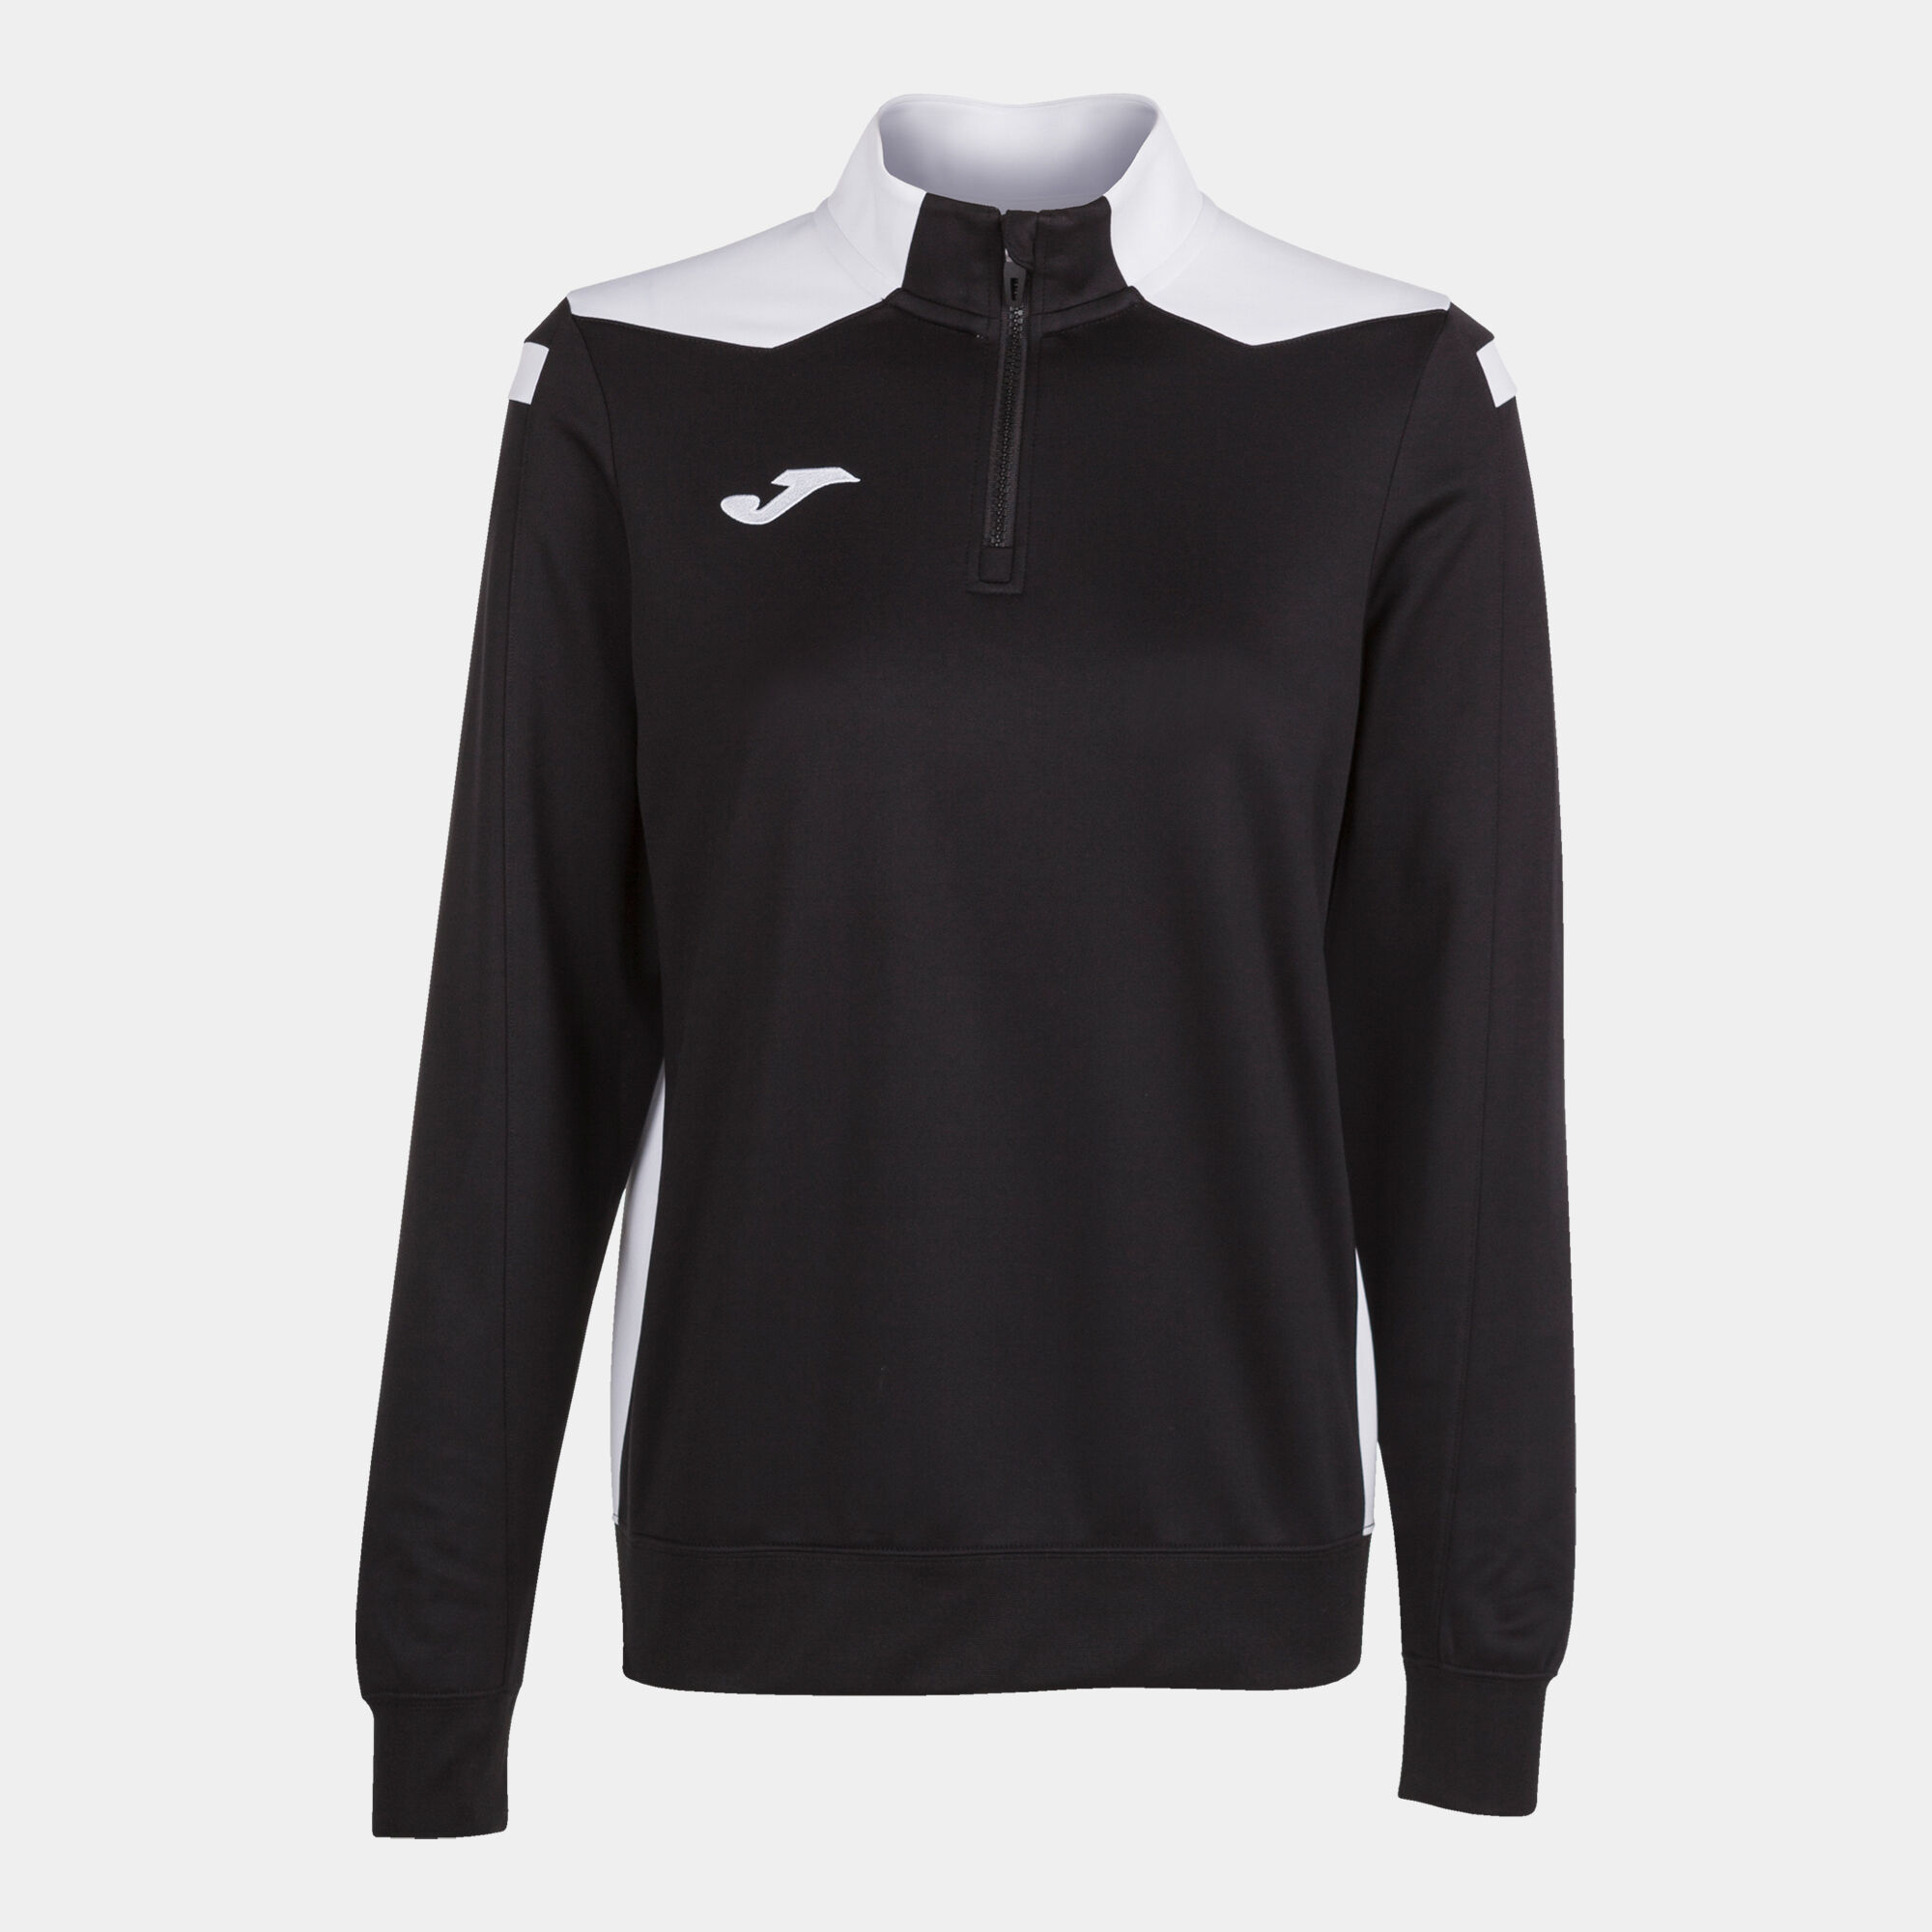 Sweat-shirt femme Championship VI noir blanc